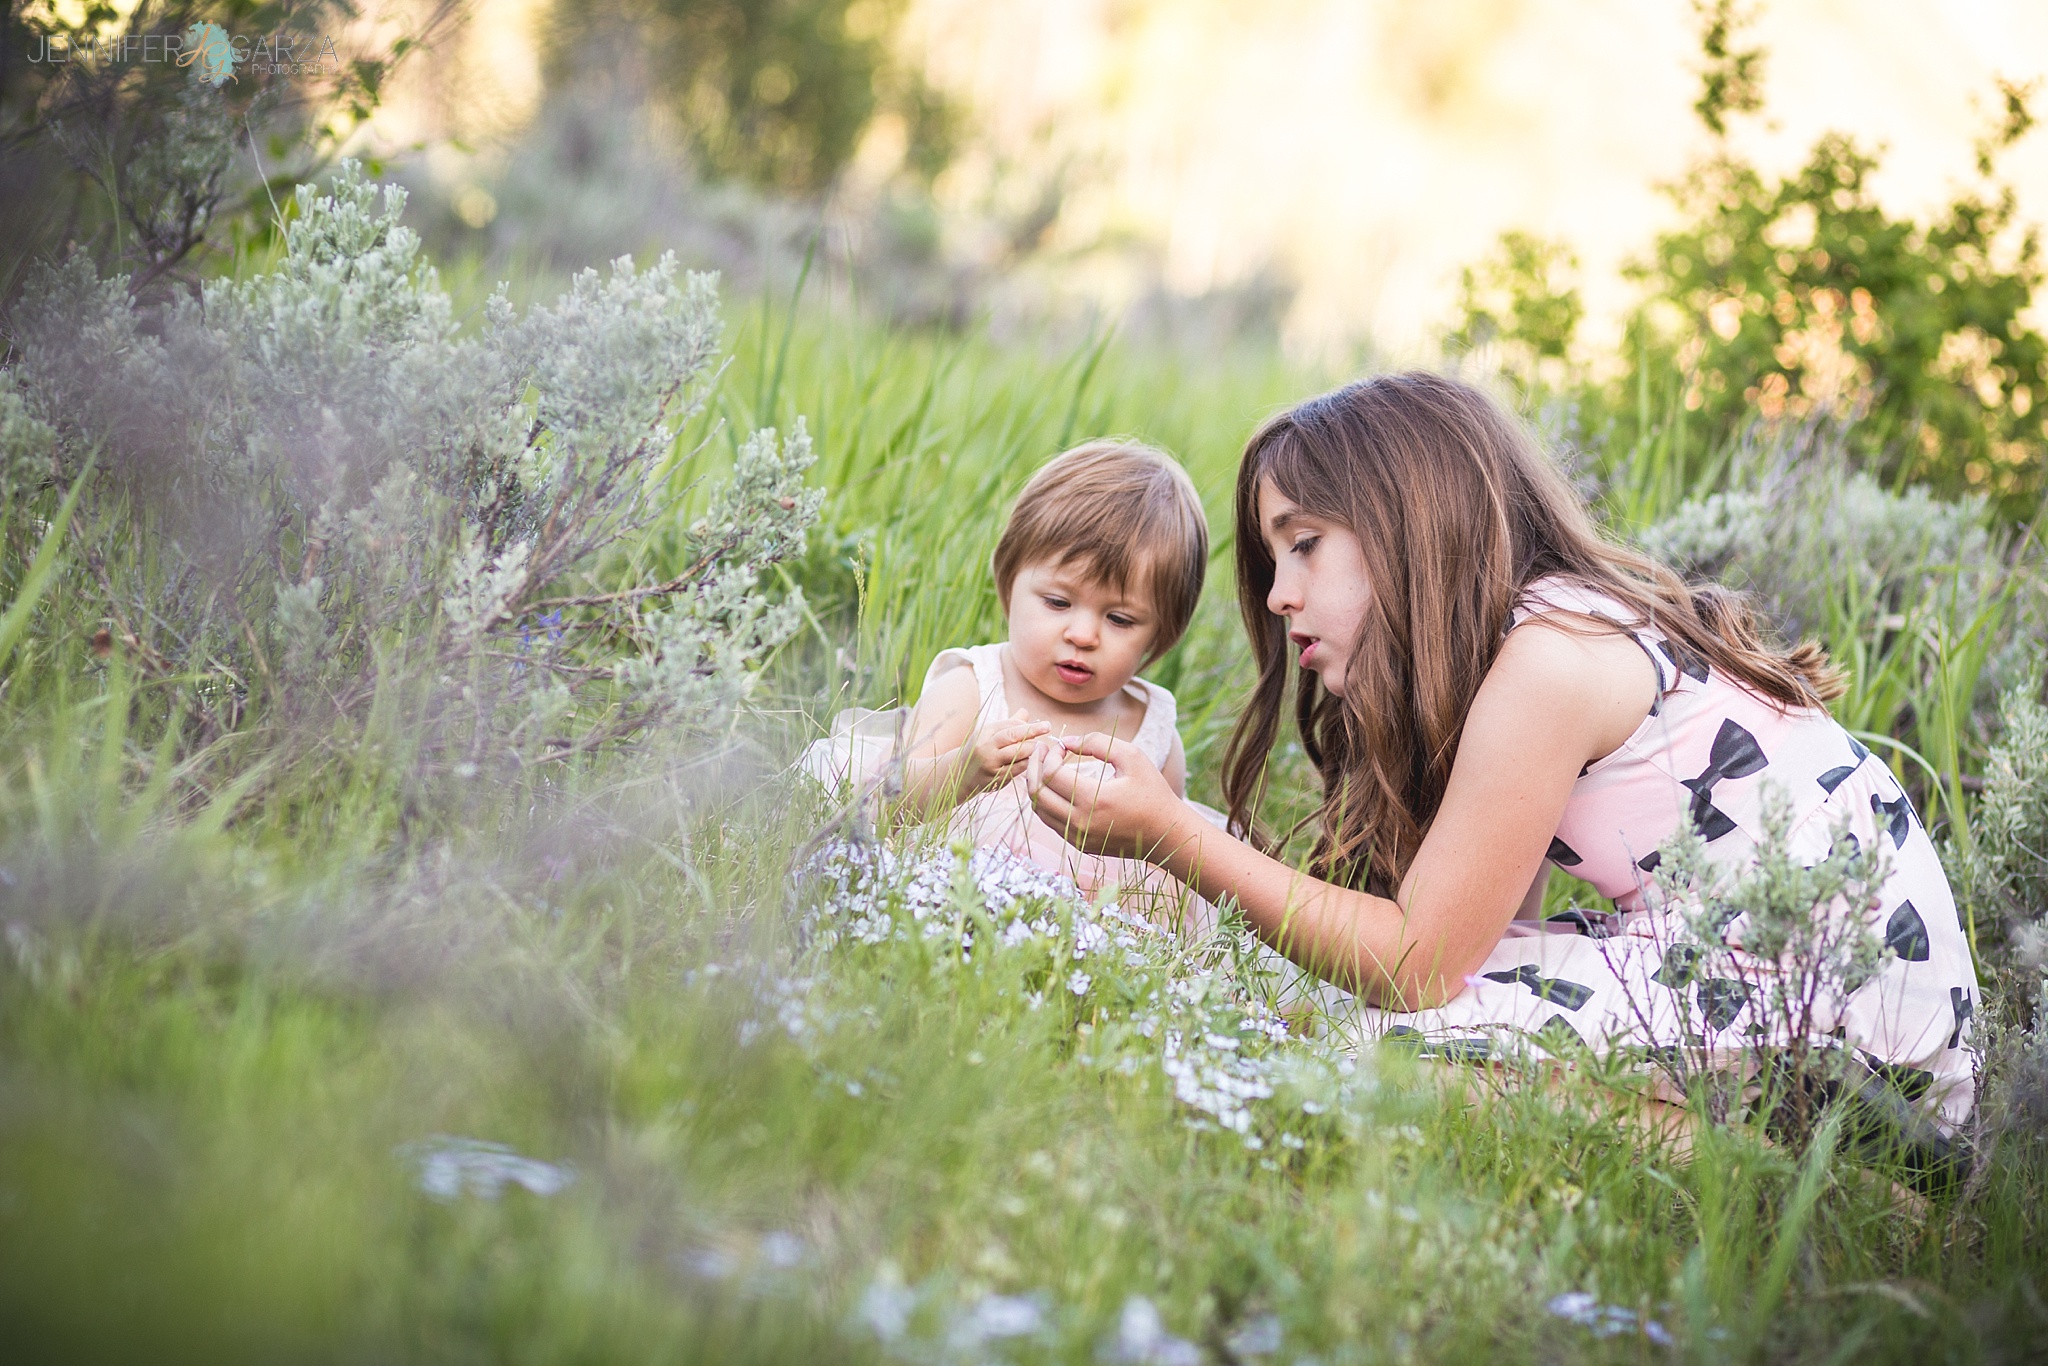 Rhyanne & Savannah picking flowers during their Sylvan Lake family photo session near Vail, Colorado.